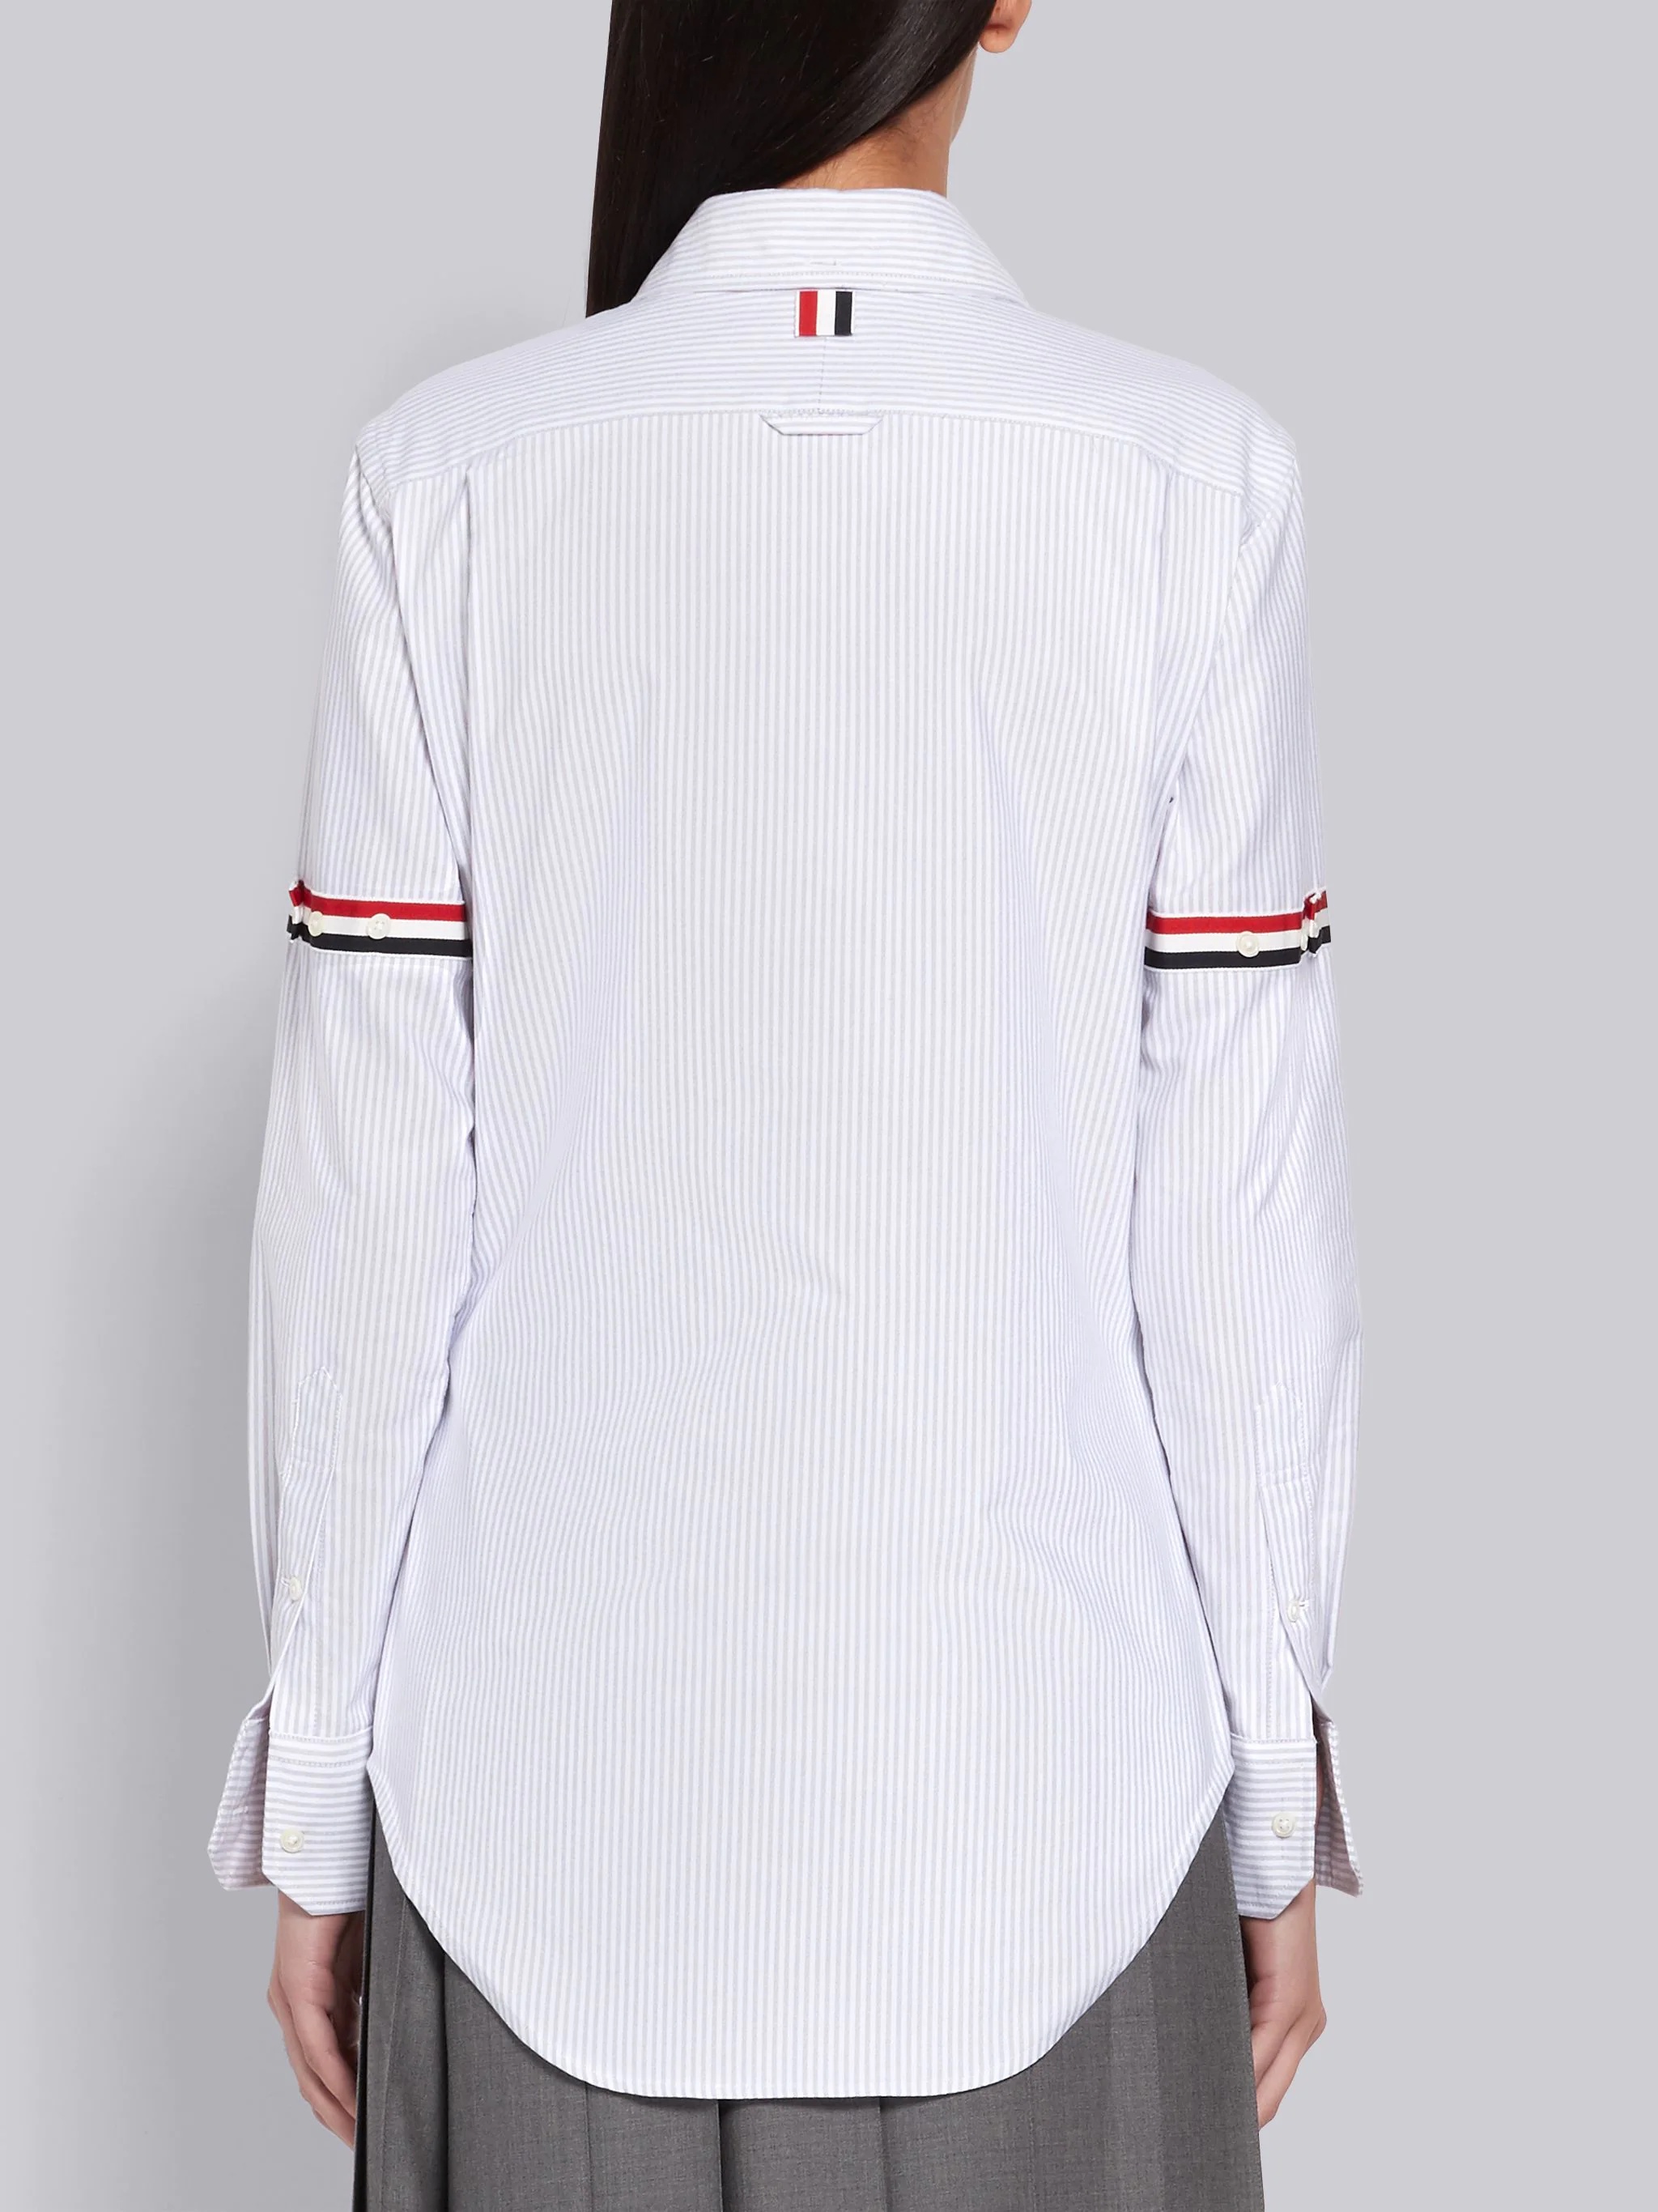 Medium Grey University Stripe Oxford Grosgrain Armband Long Sleeve Shirt - 4